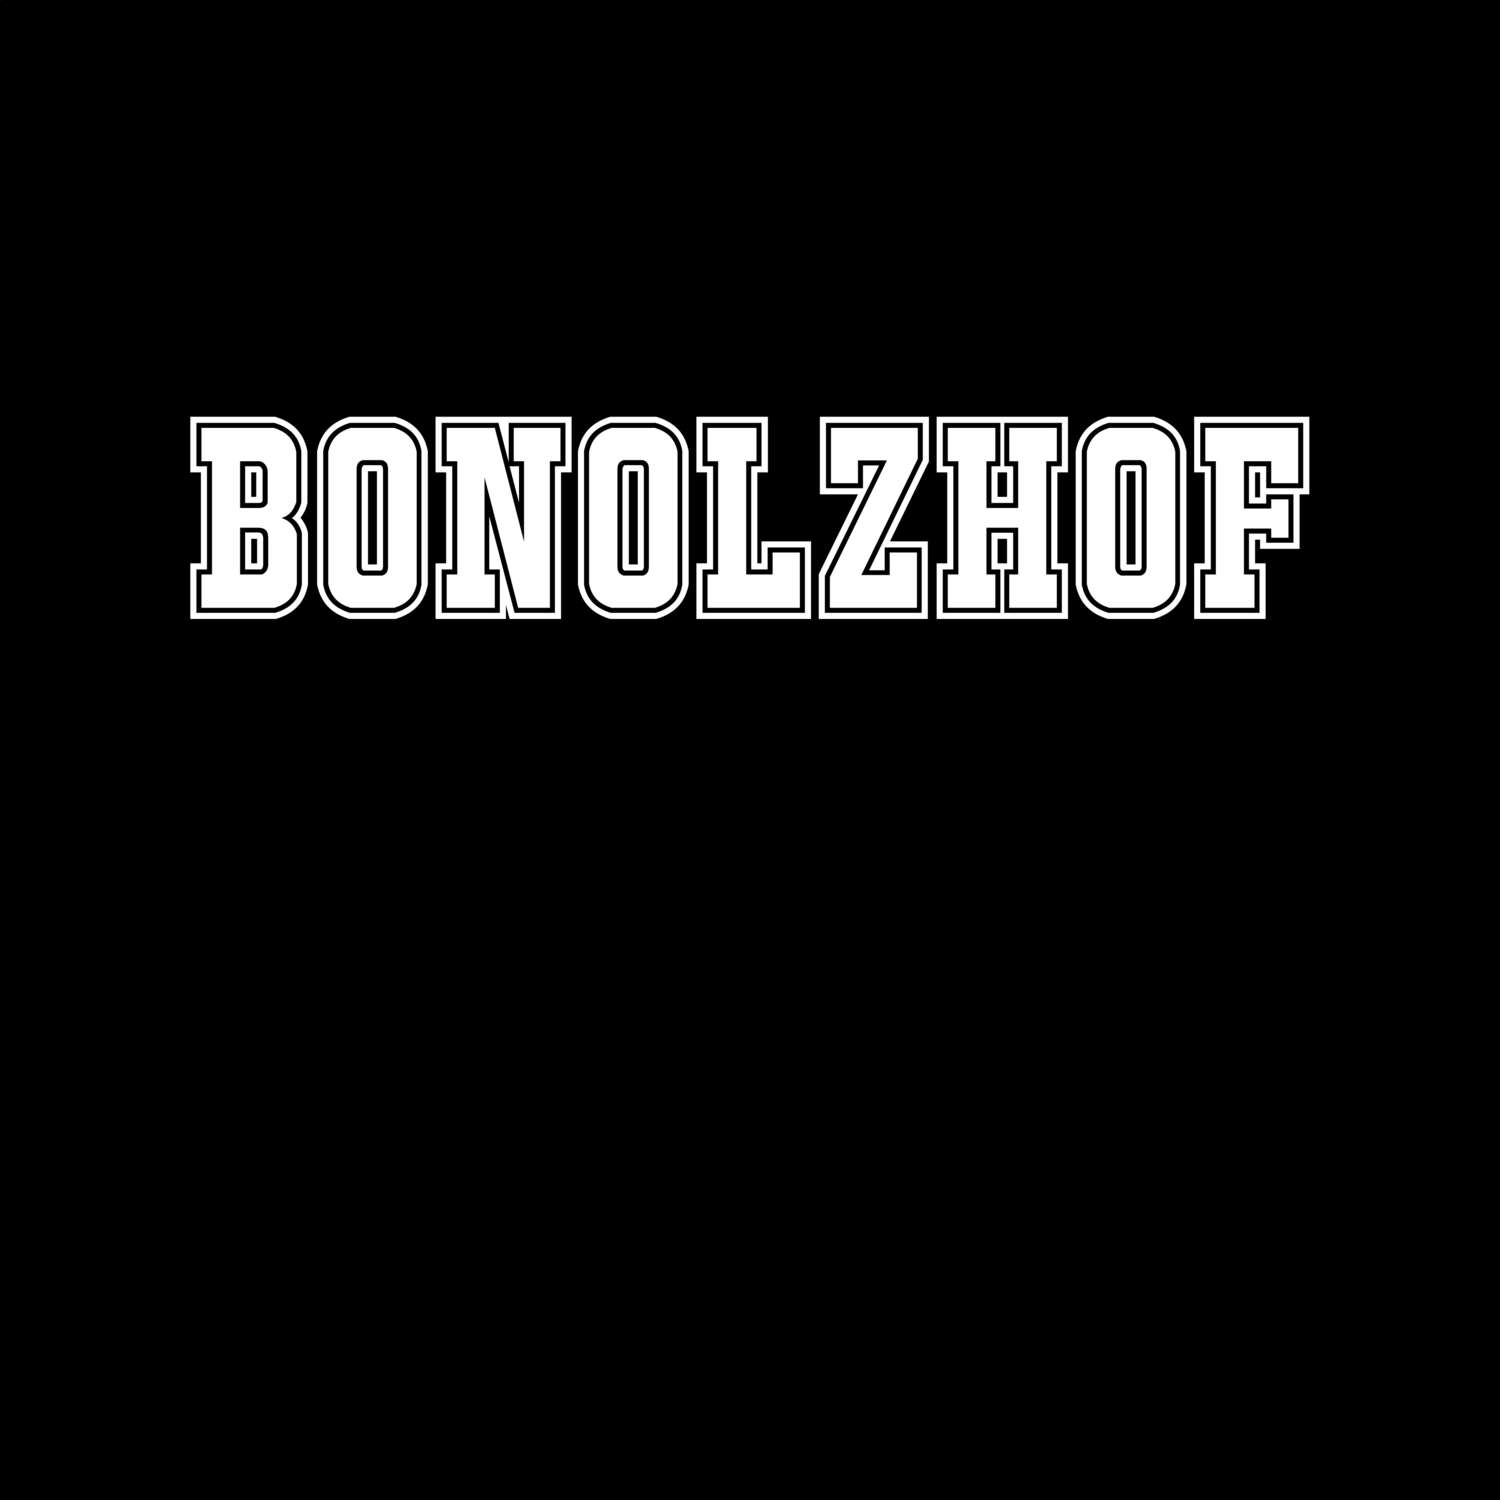 Bonolzhof T-Shirt »Classic«